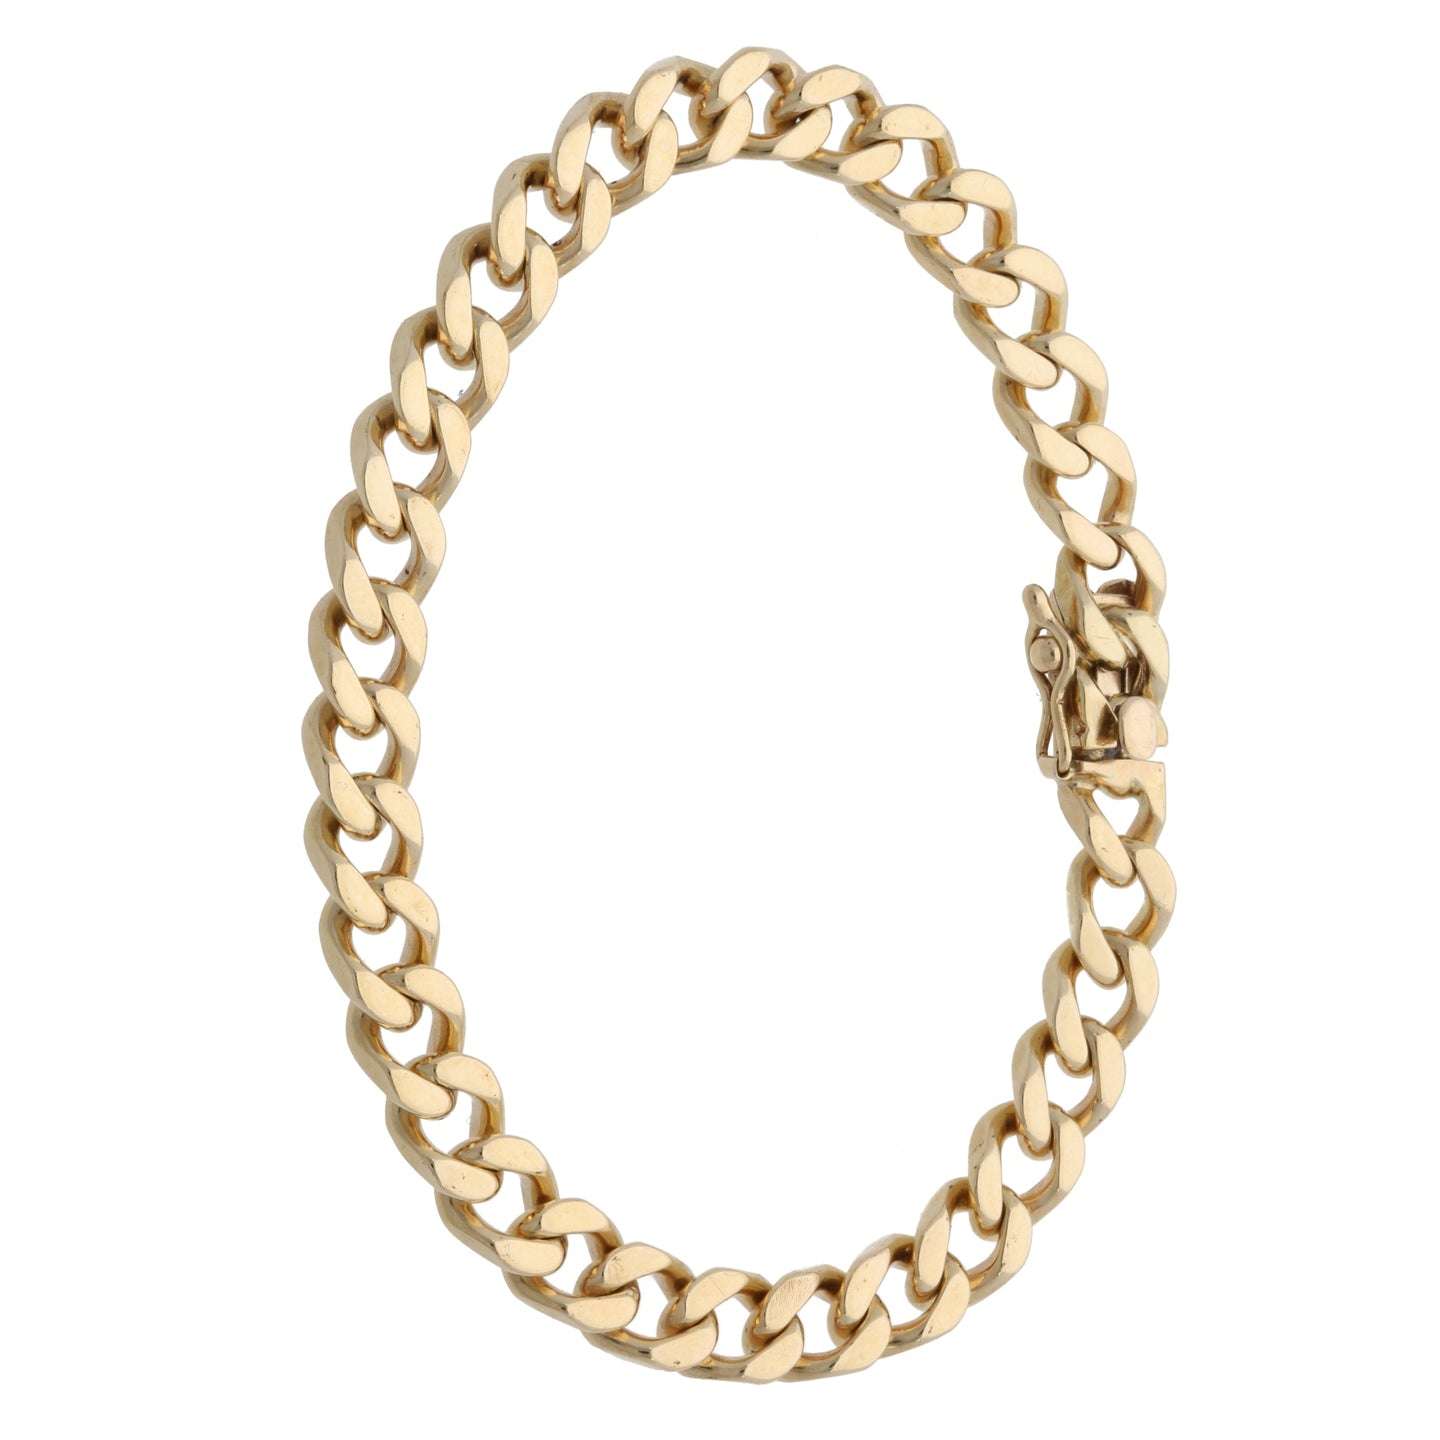 9ct Gold Curb Bracelet